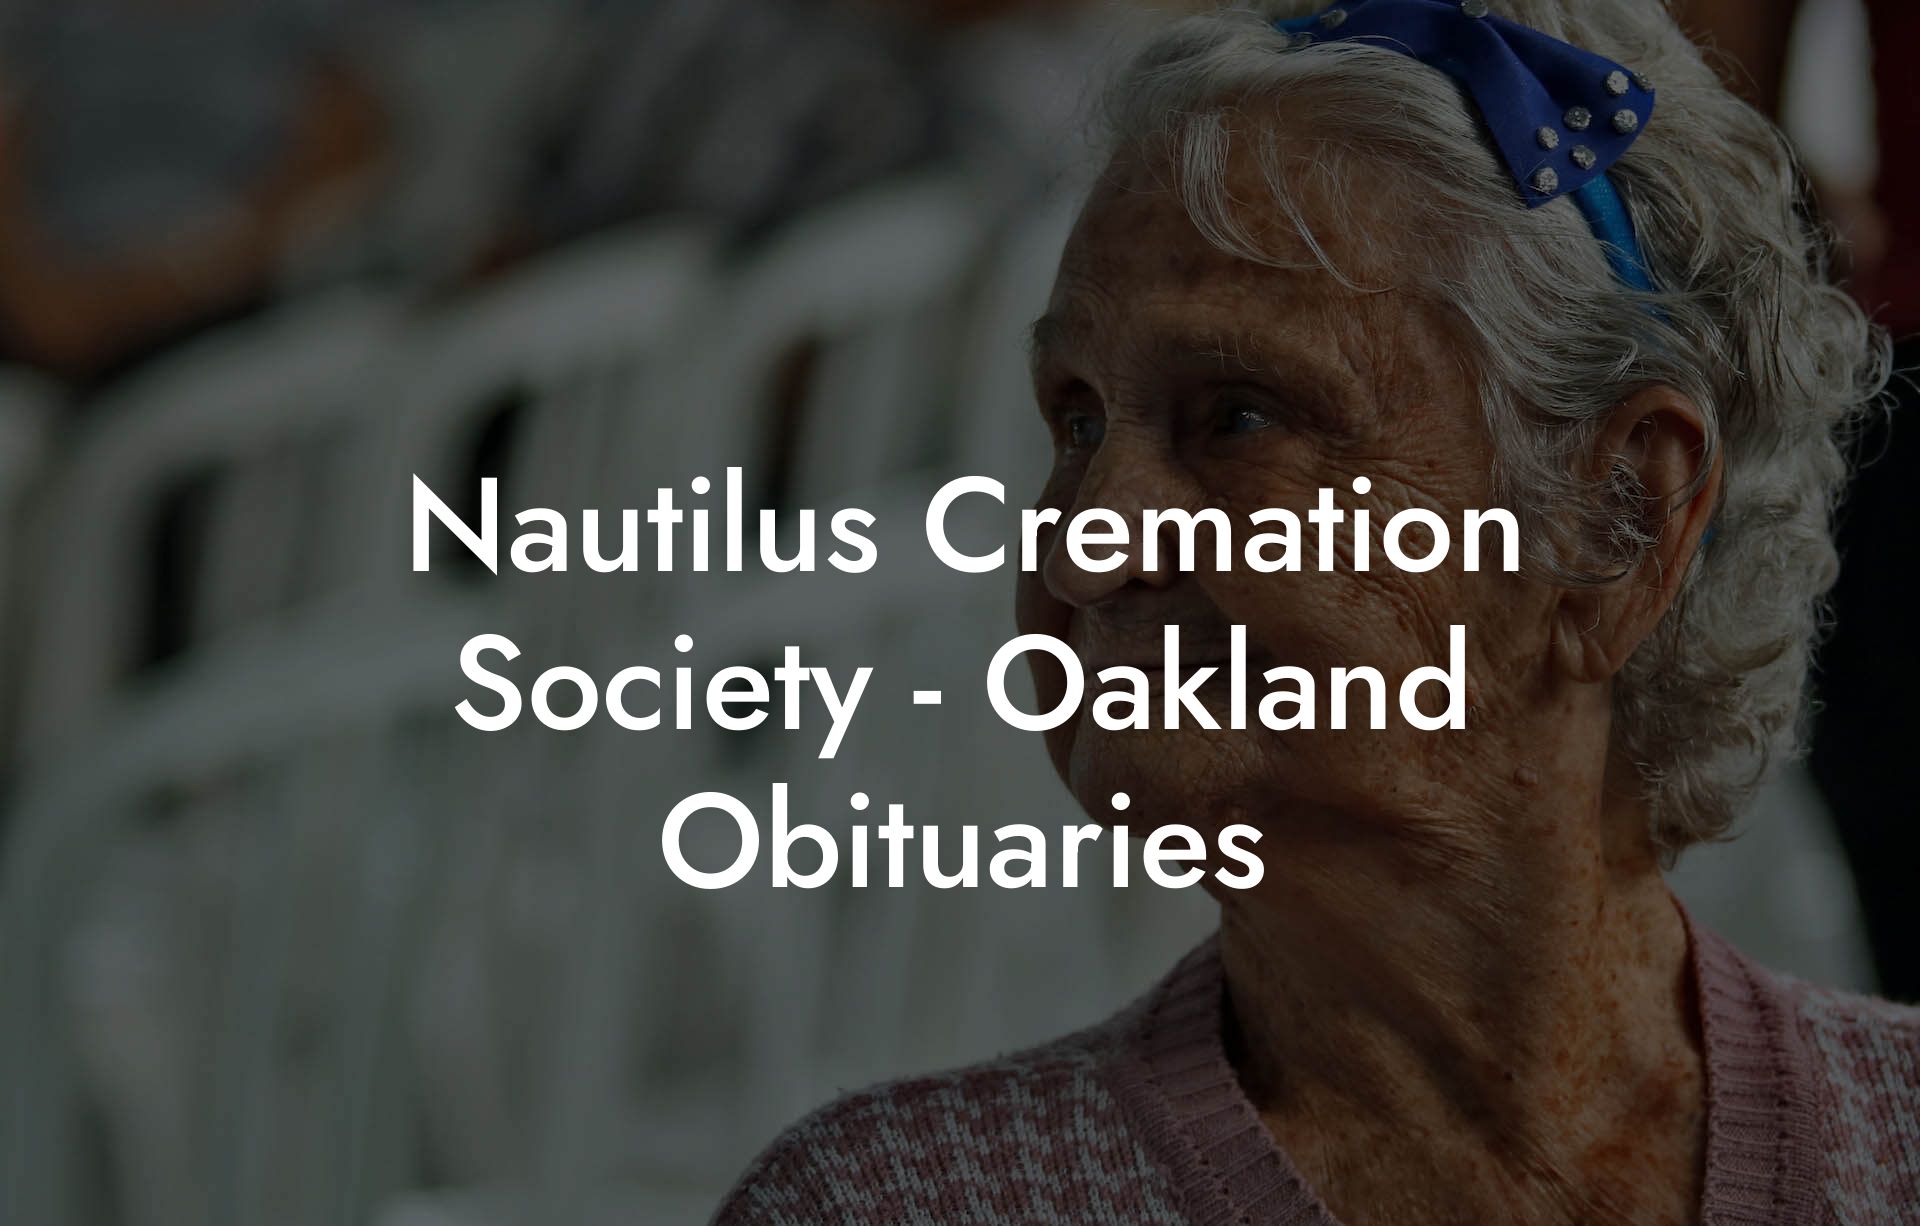 Nautilus Cremation Society - Oakland Obituaries